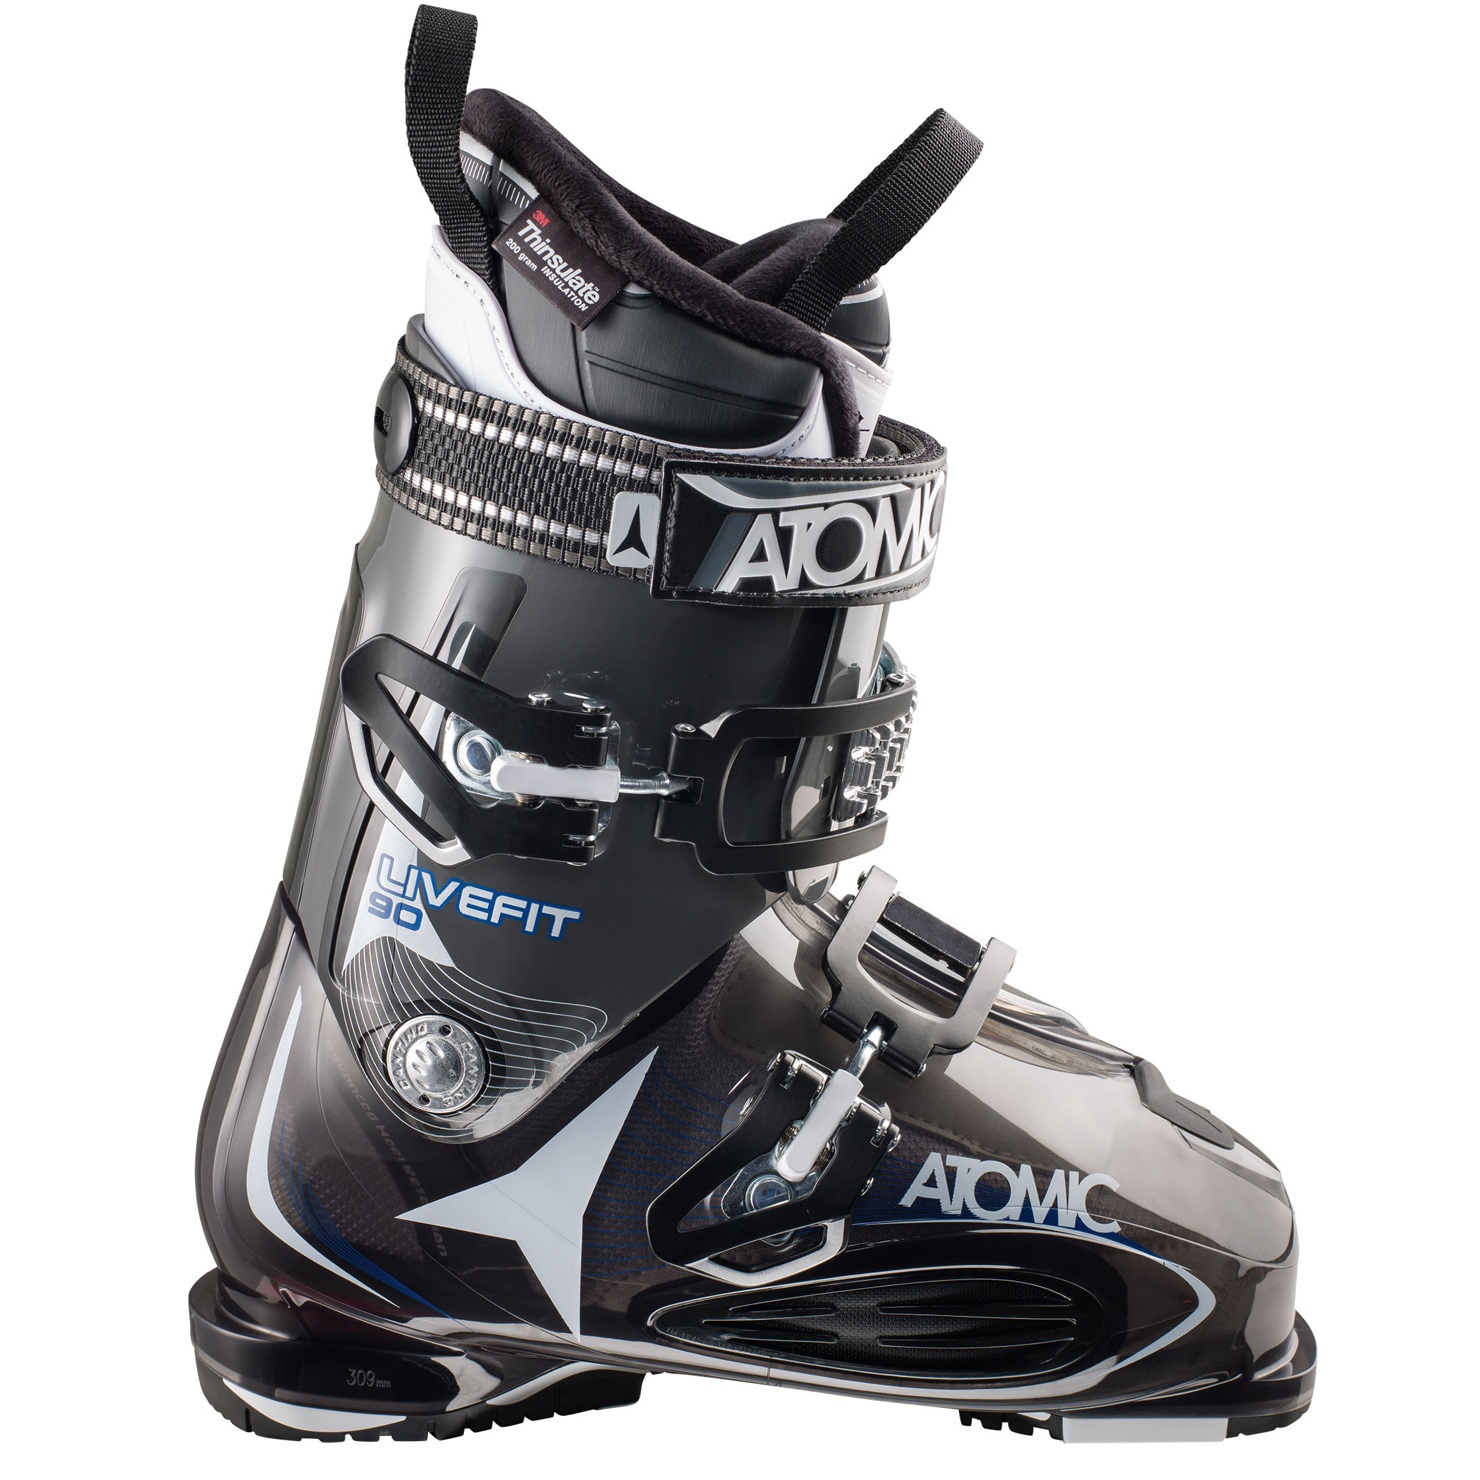 Ski Boots -  atomic Live Fit 90